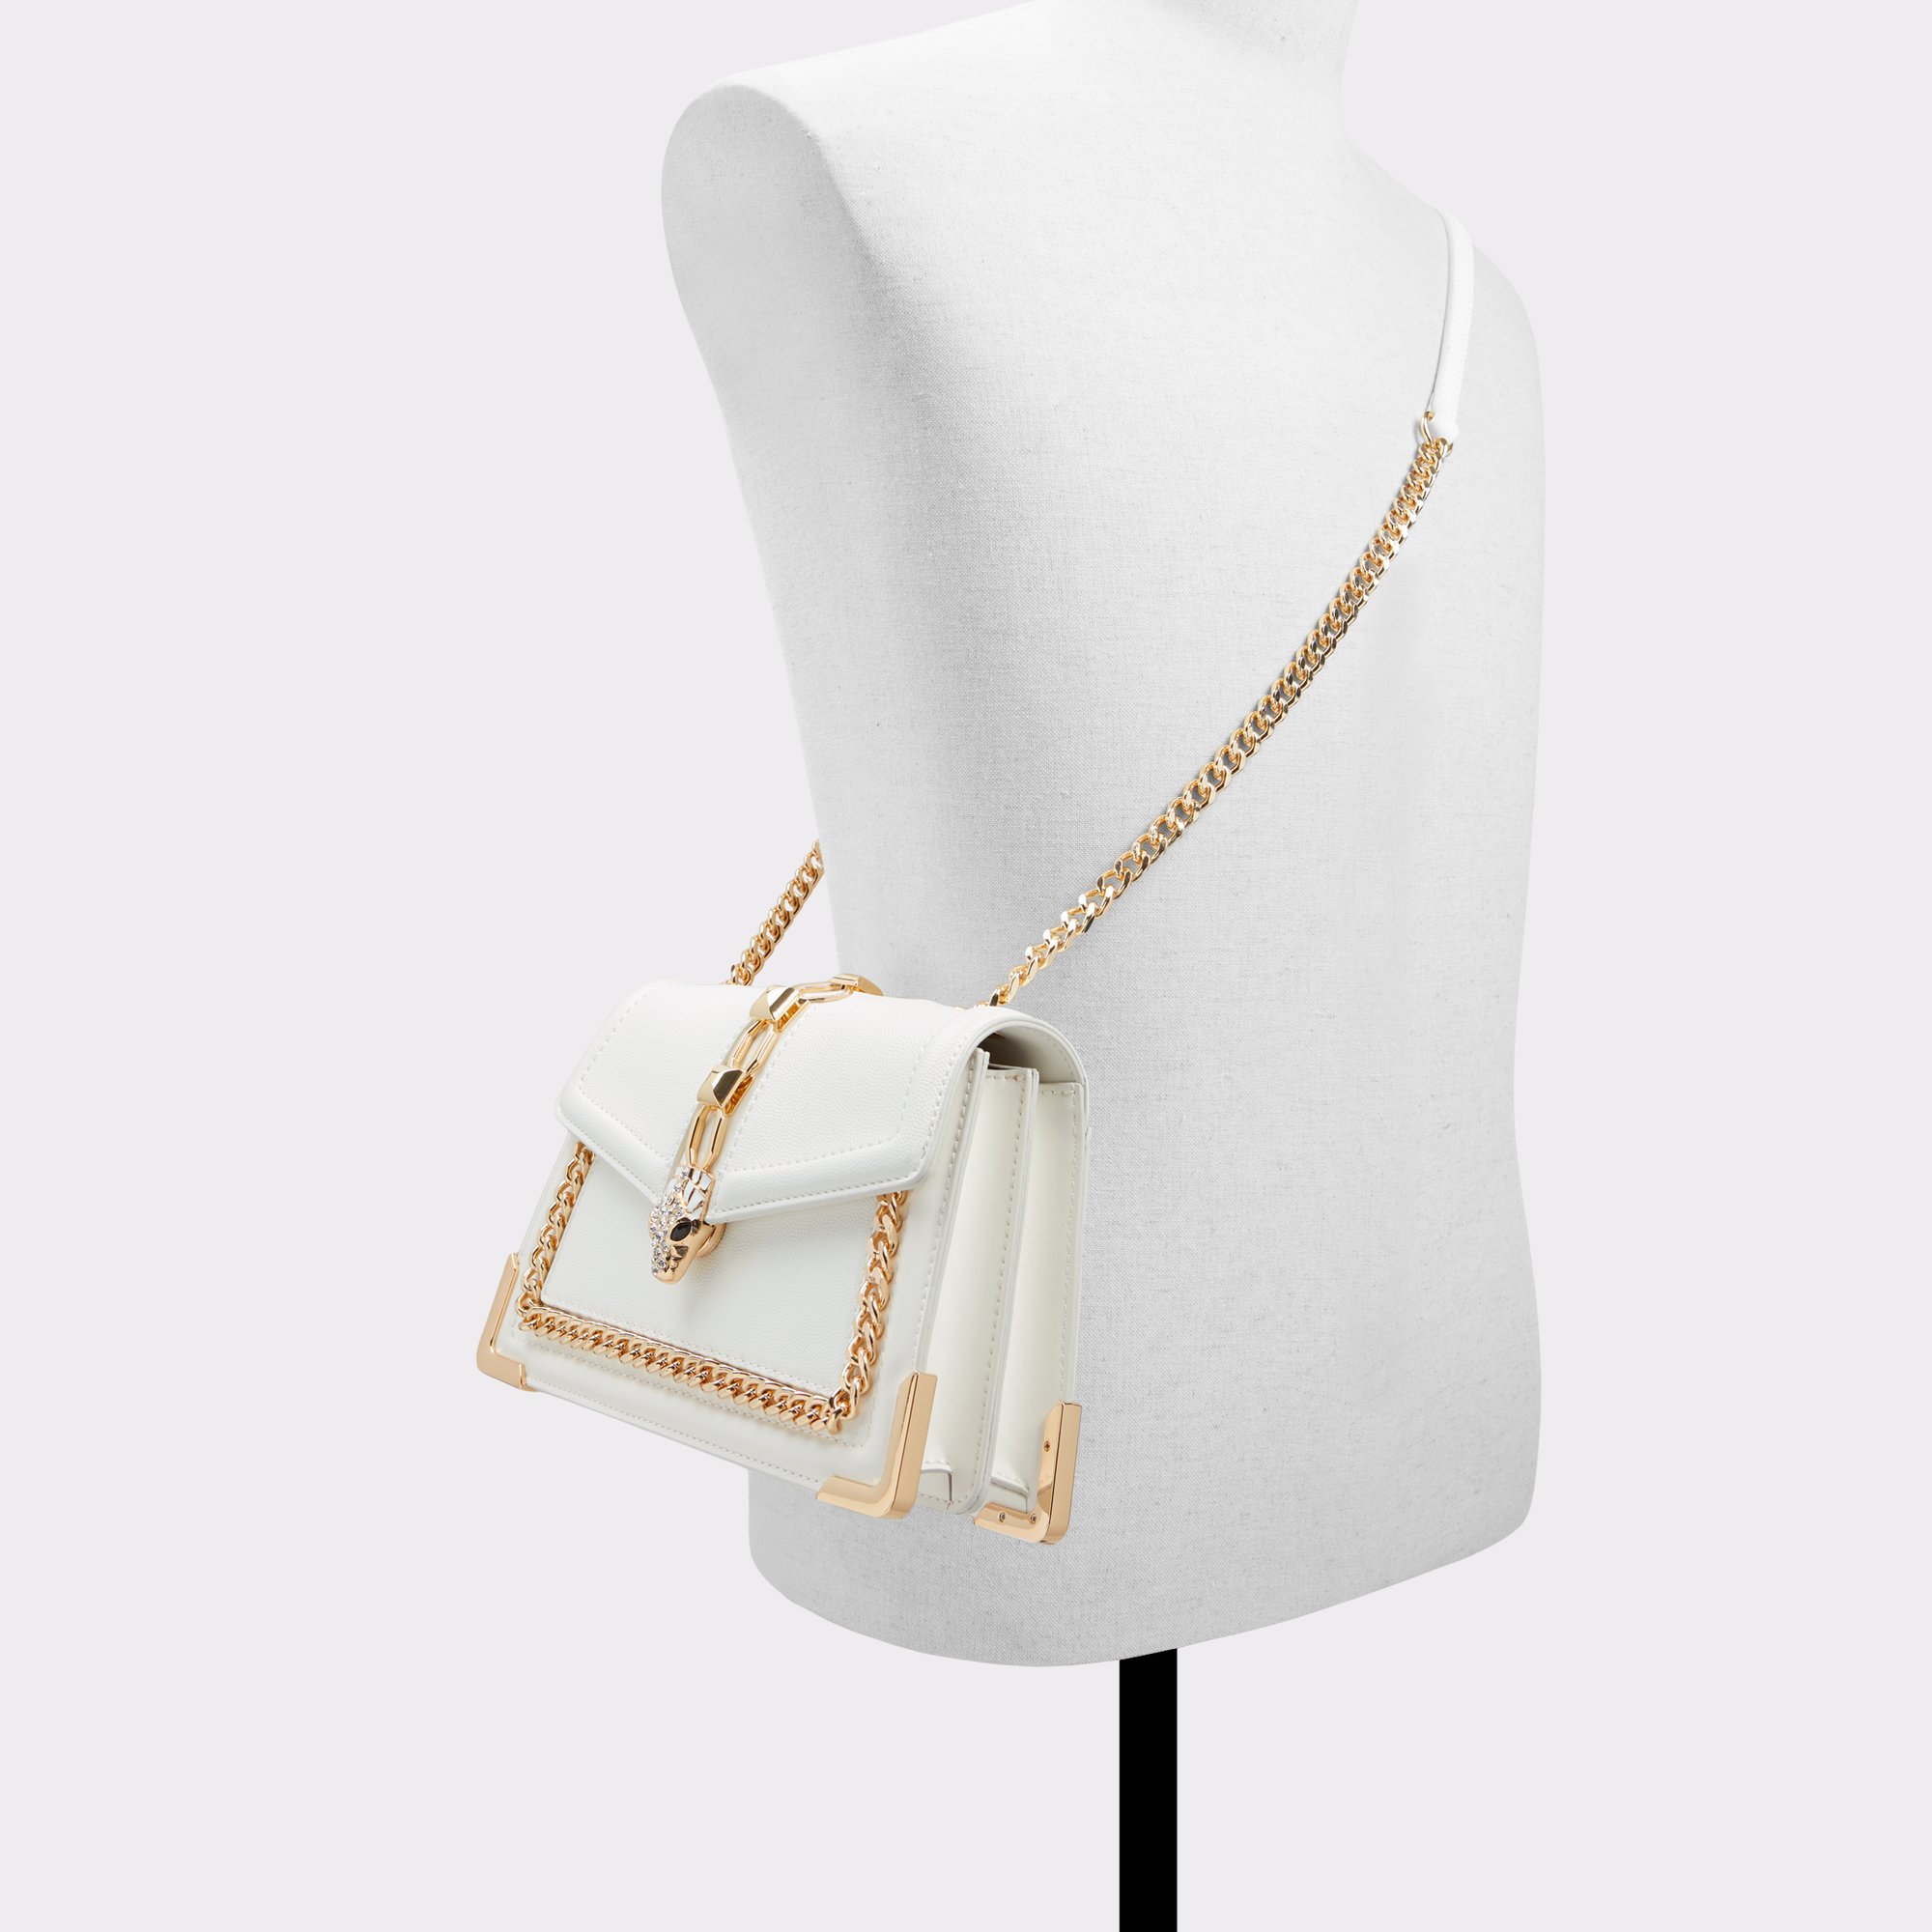 Ferventtx White Women's Shoulder Bags | ALDO US